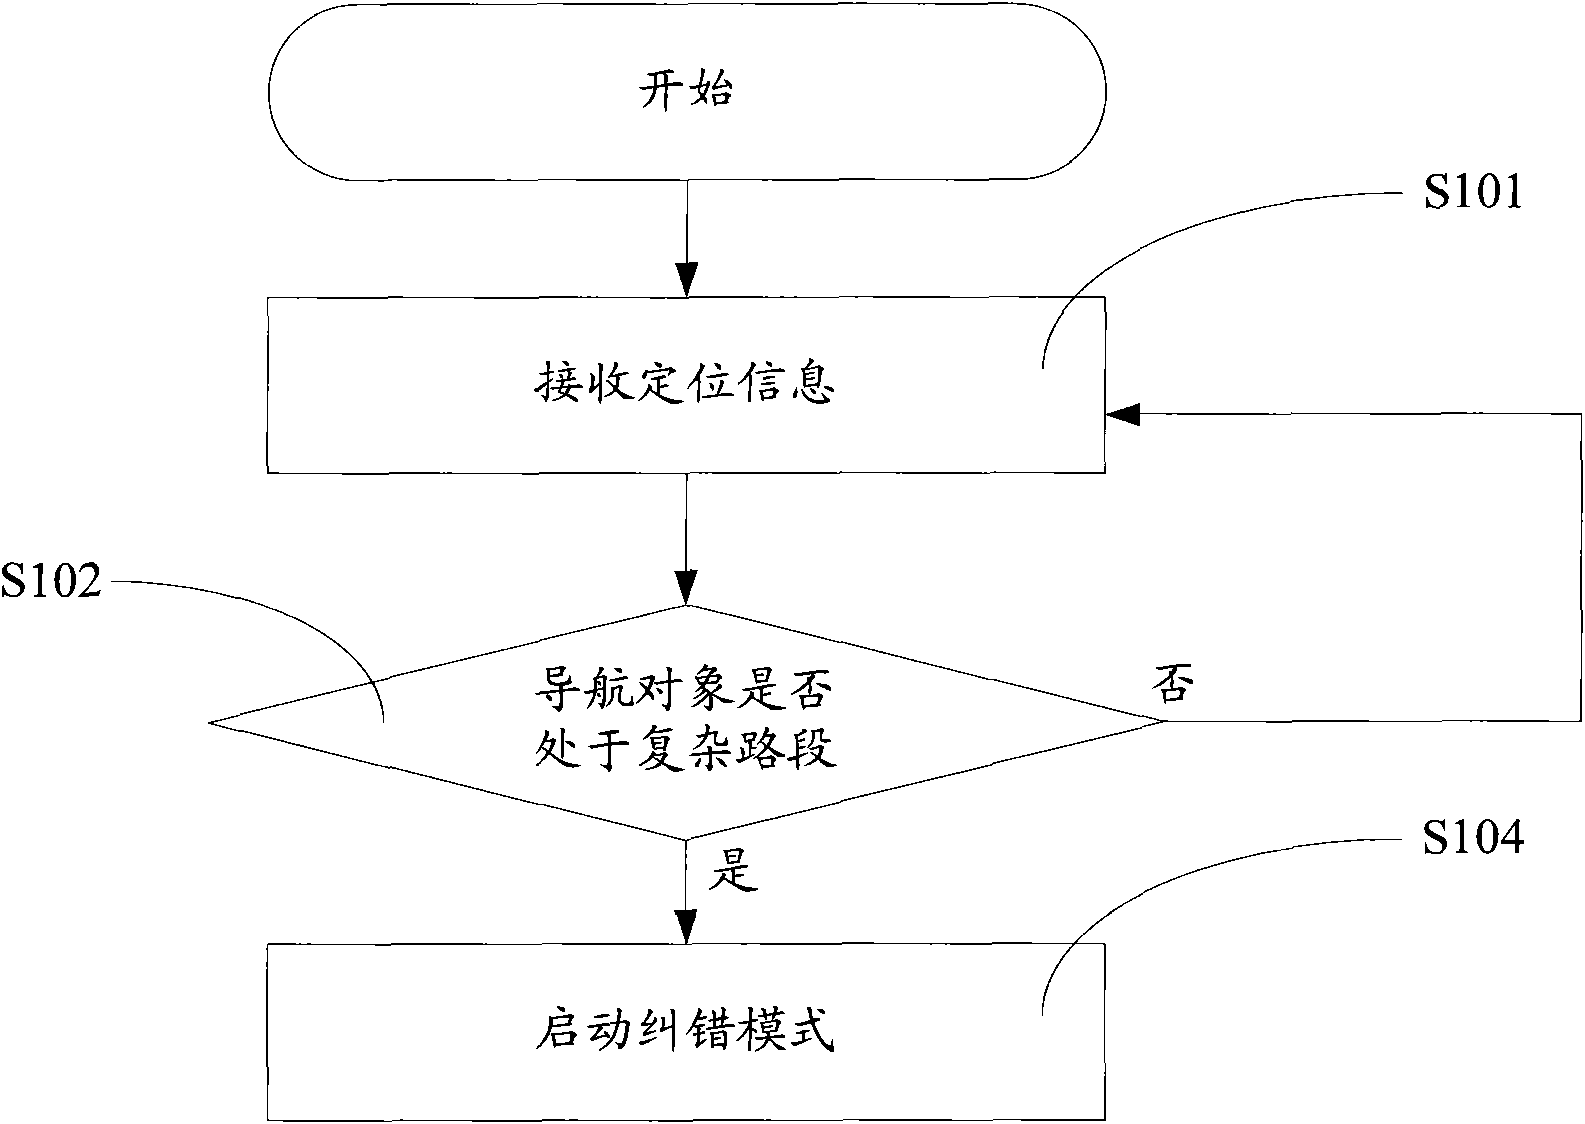 Error correcting method of navigation system